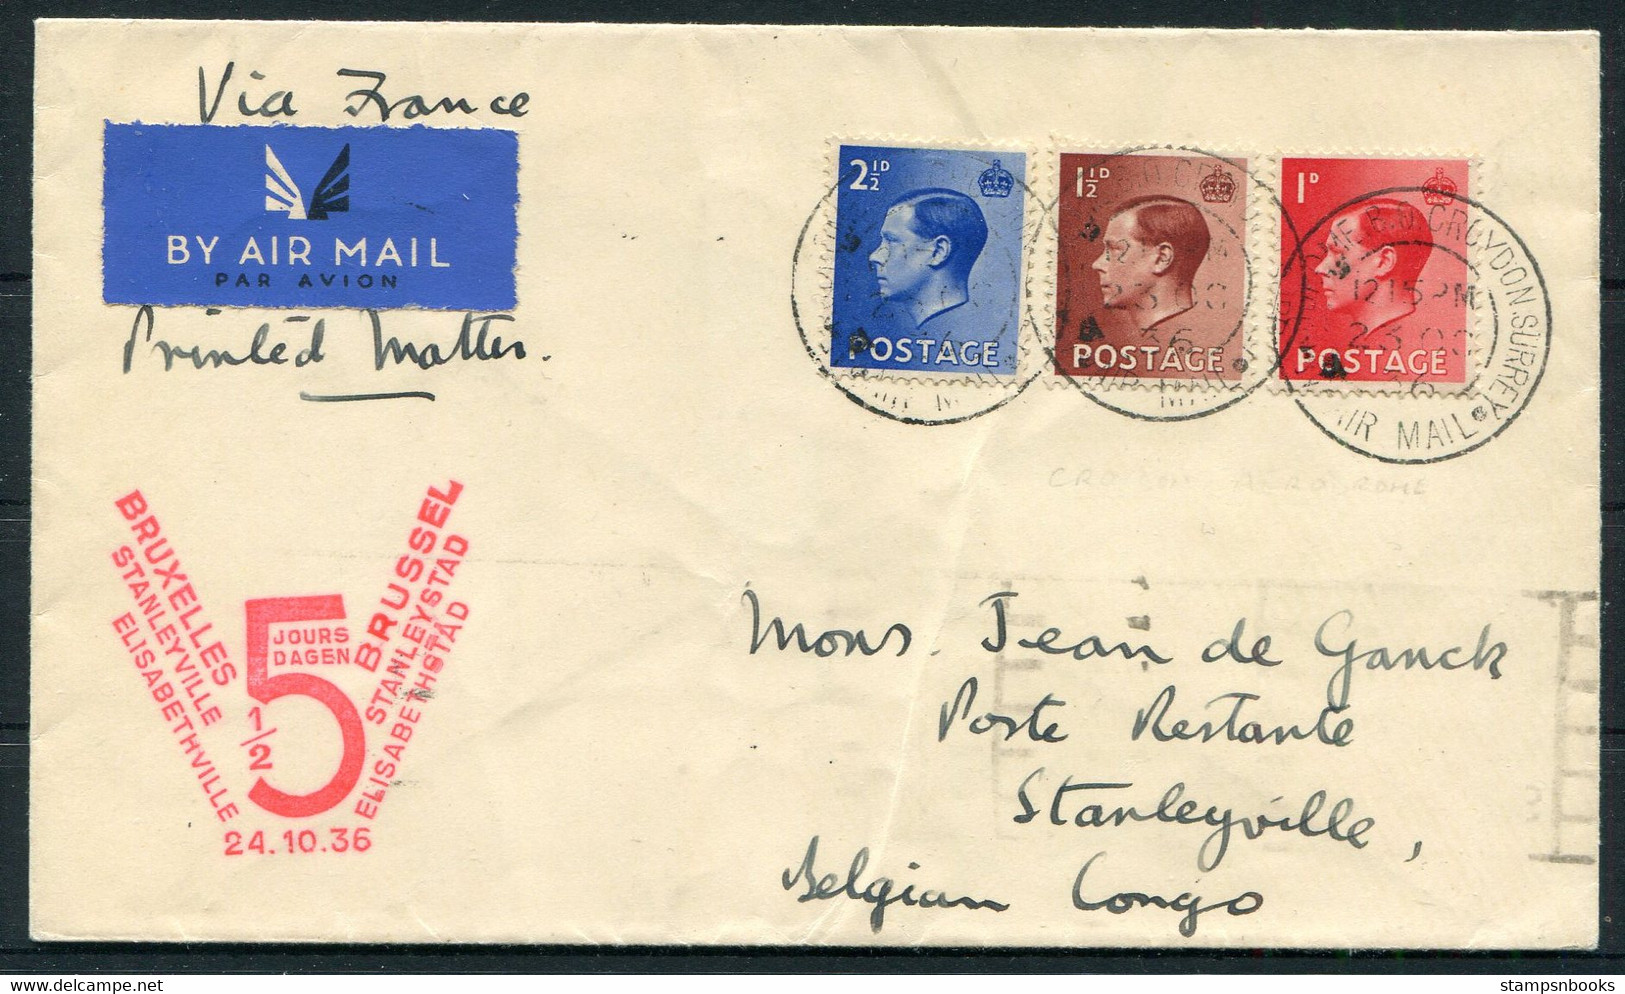 1936 (Oct 23rd) Croydon Aerodrome Air France / SABENA First Flight Airmail Cover - Stanleyville,Belgian Congo Via Paris - Lettres & Documents